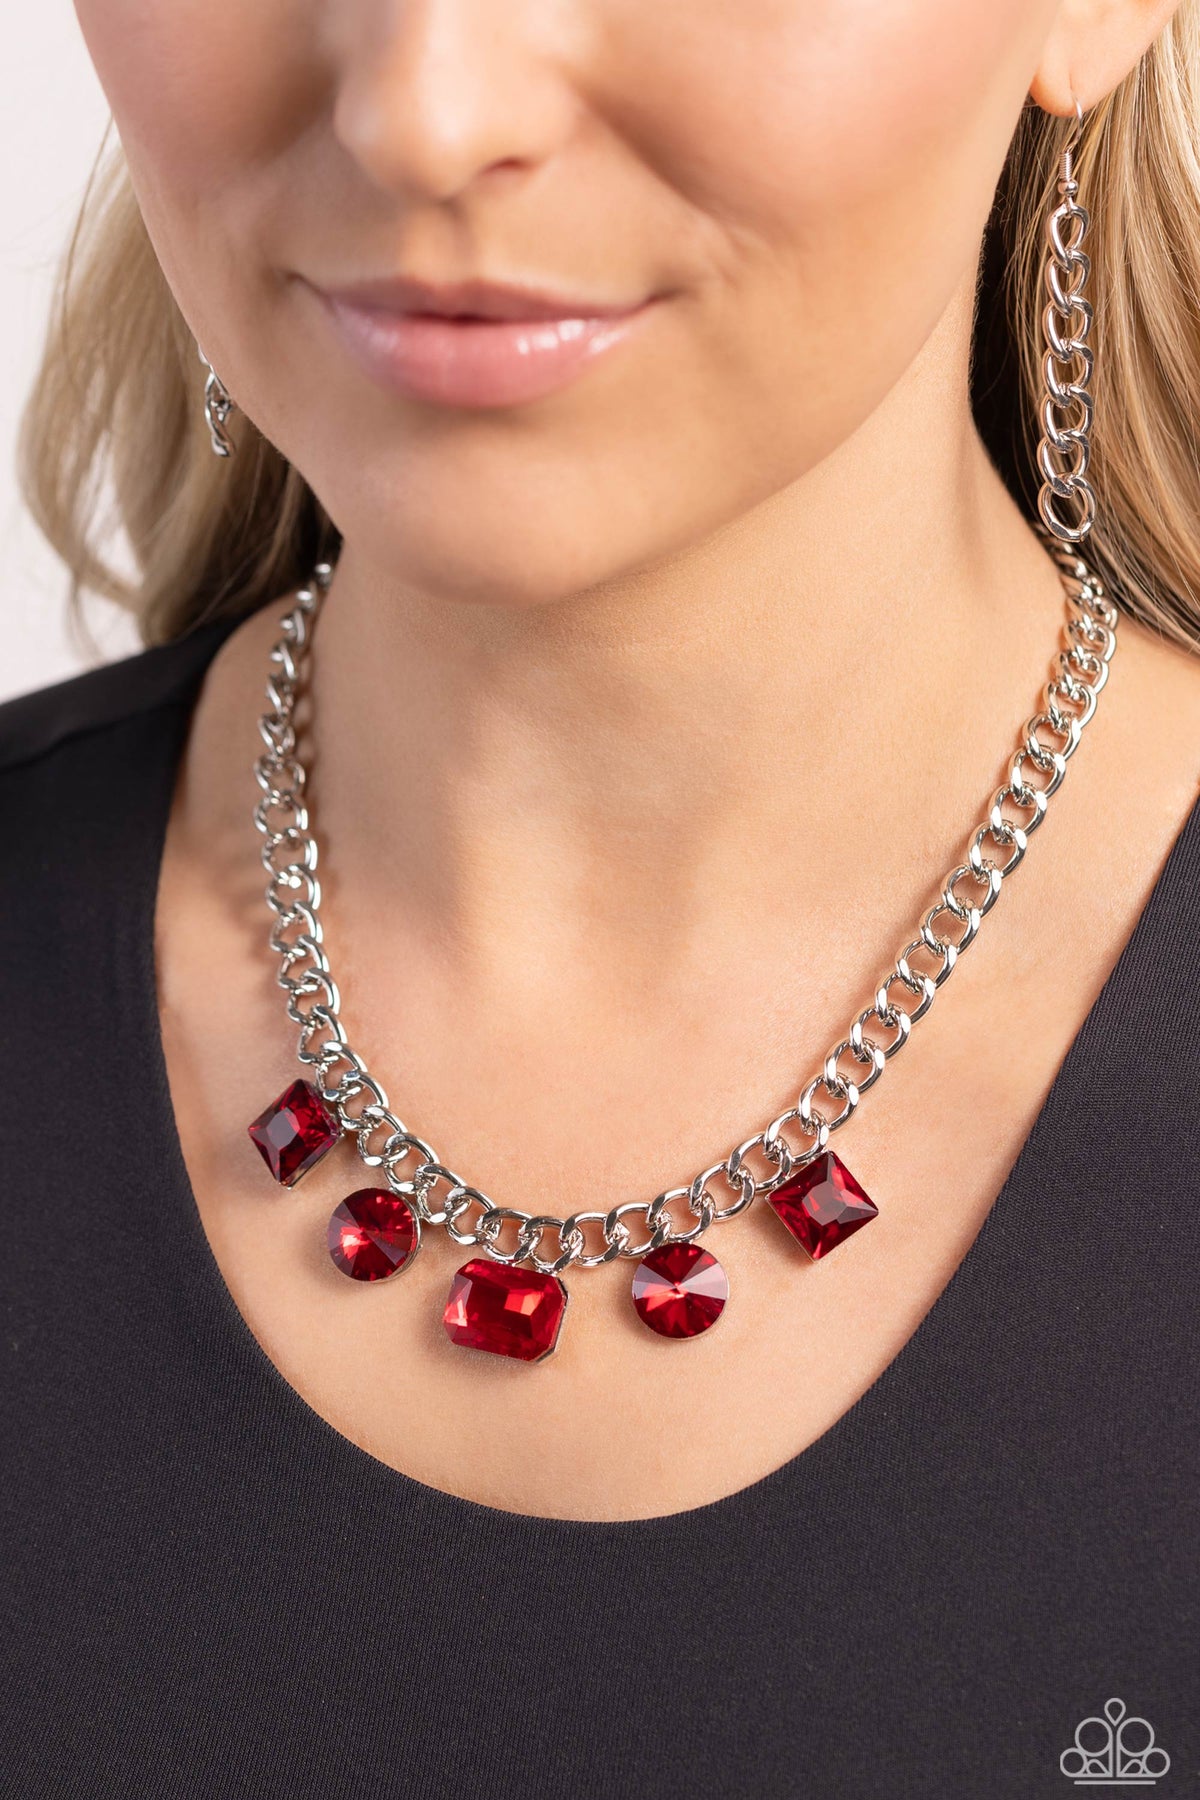 Alternating Audacity Red Rhinestone Necklace - Paparazzi Accessories-on model - CarasShop.com - $5 Jewelry by Cara Jewels